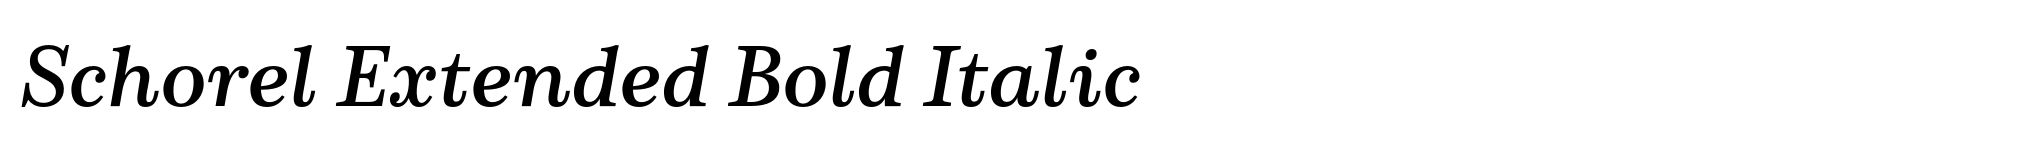 Schorel Extended Bold Italic image